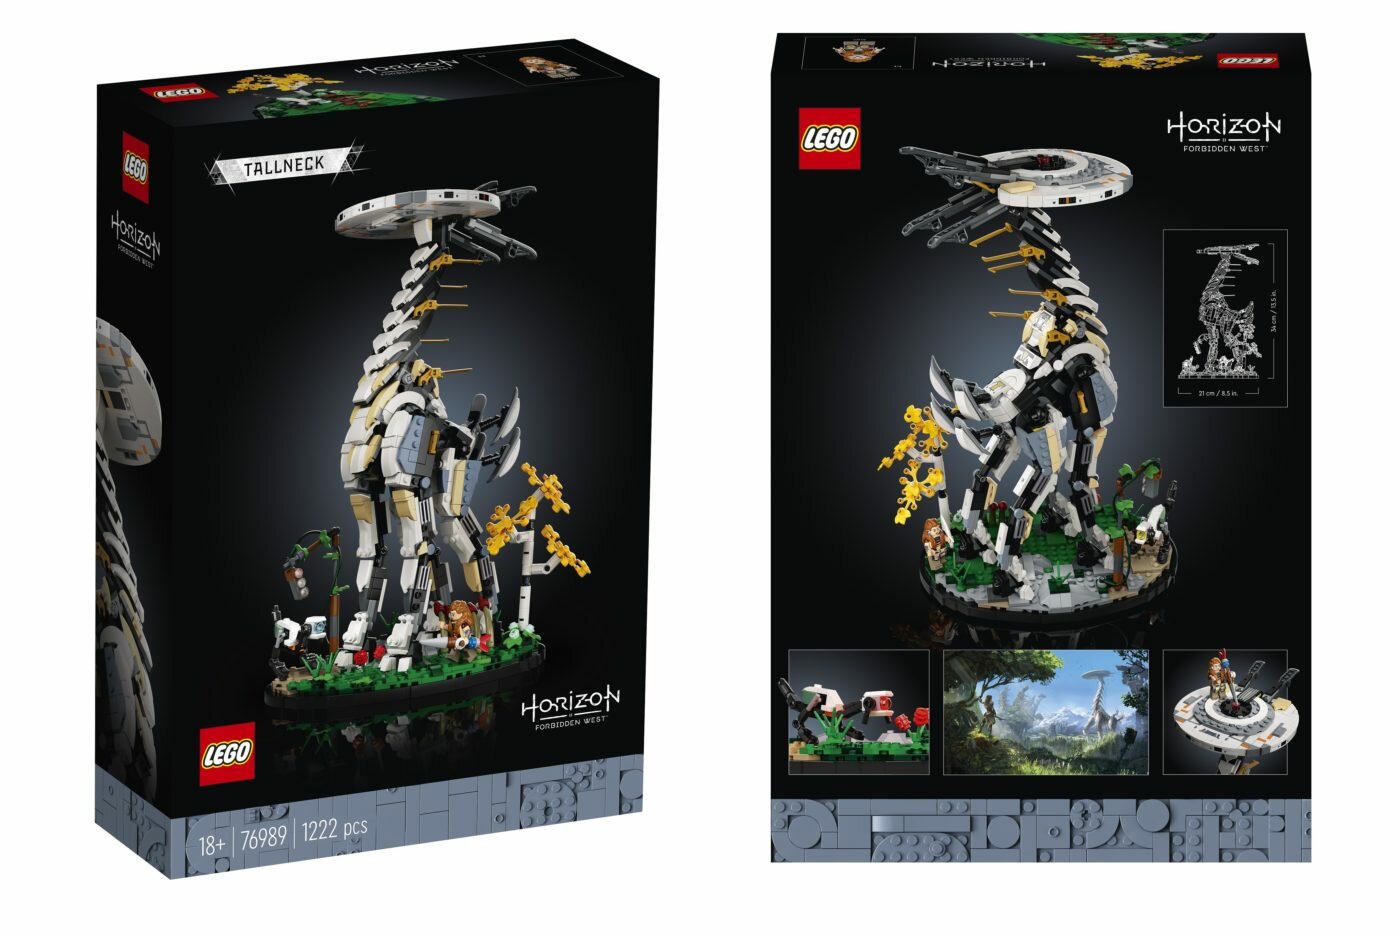 76989-LEGO-Horizon-Forbidden-West-Tallneck-Box-1400x936.jpg